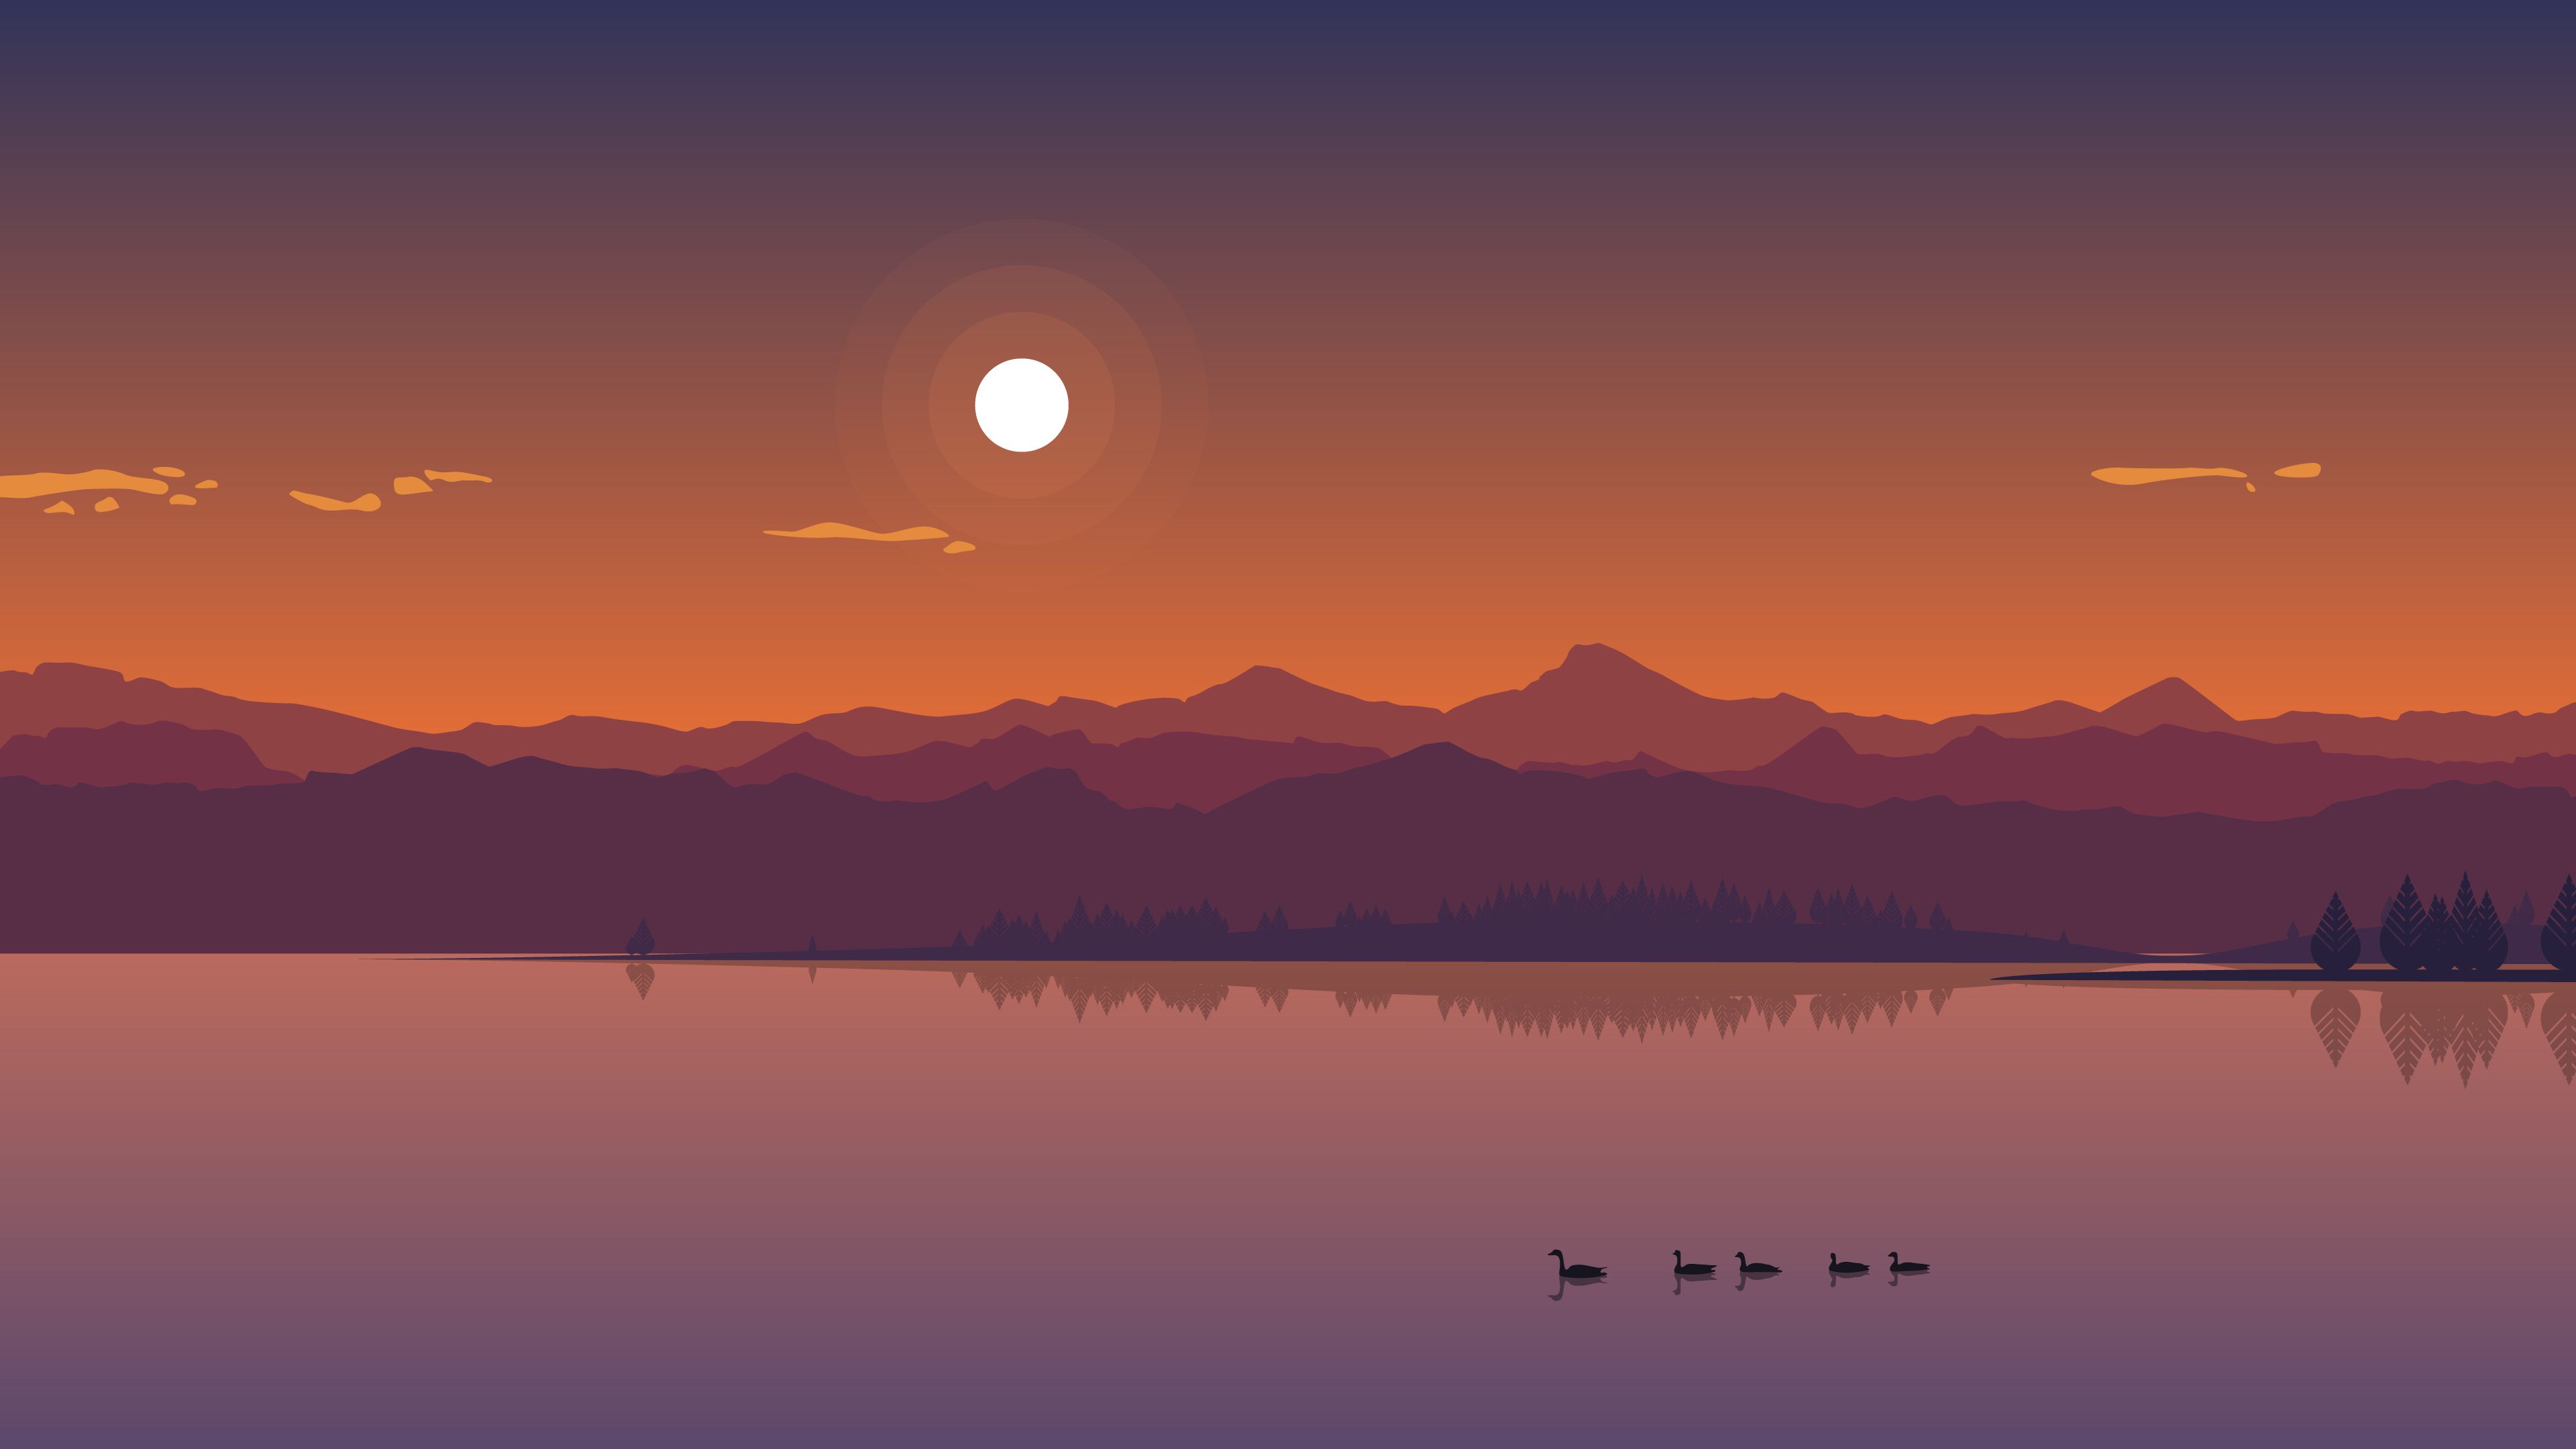 Minimal Lake Sunset, HD Nature, 4k Wallpaper, Image, Background